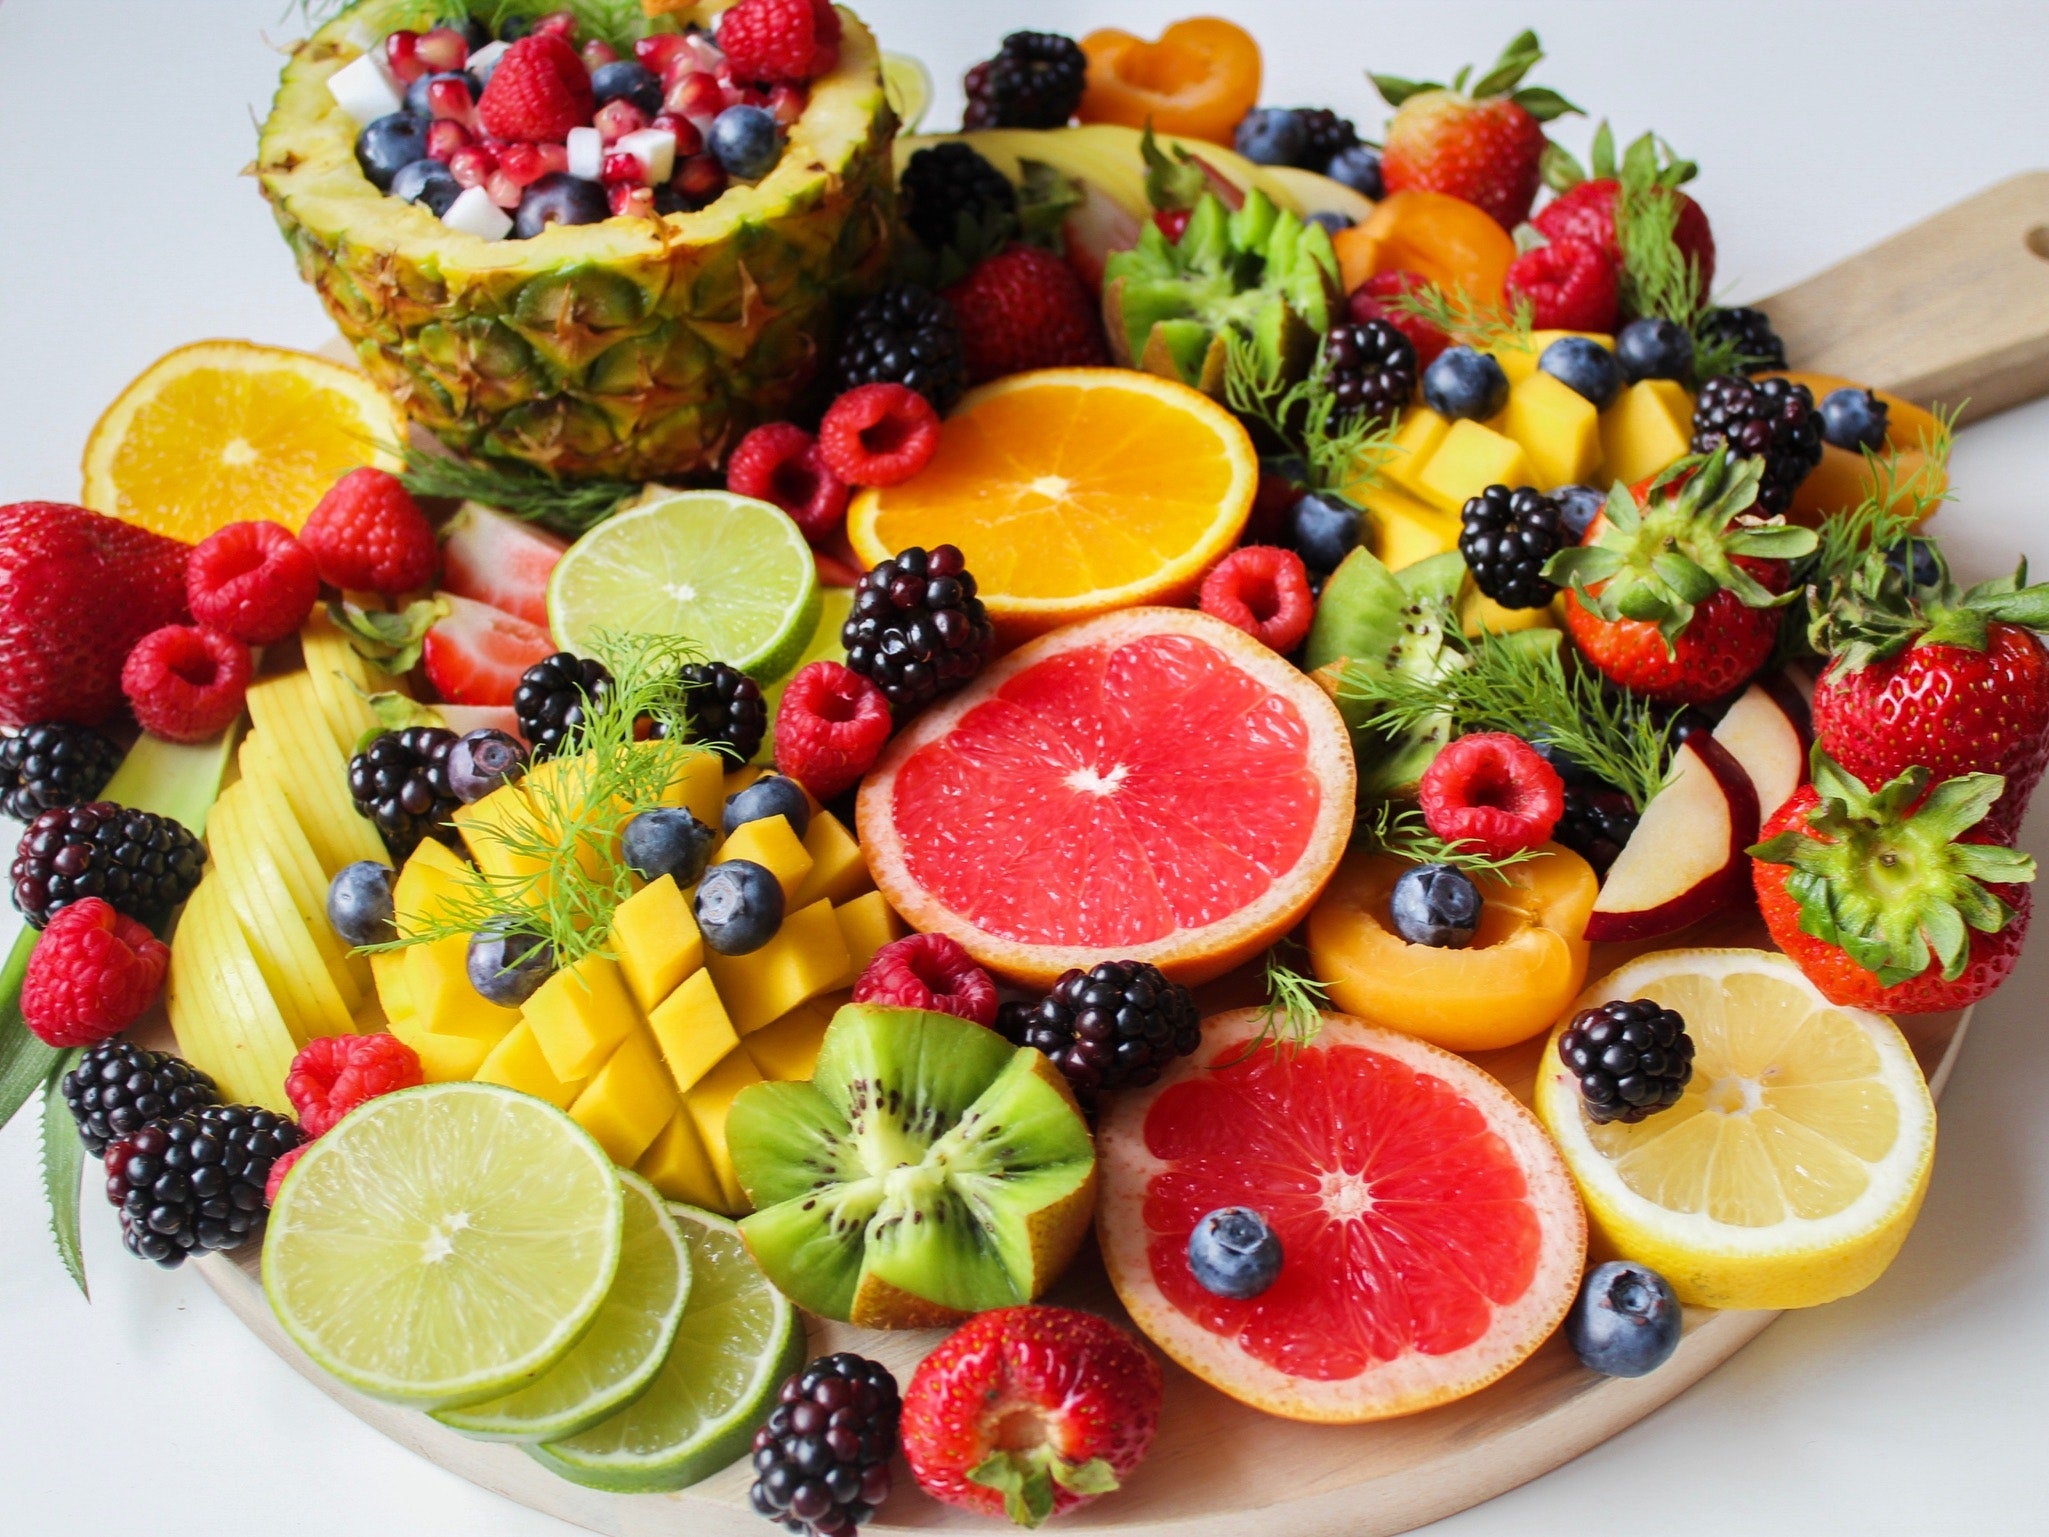 Fruit: Friend or Foe For Managing Diabetes?